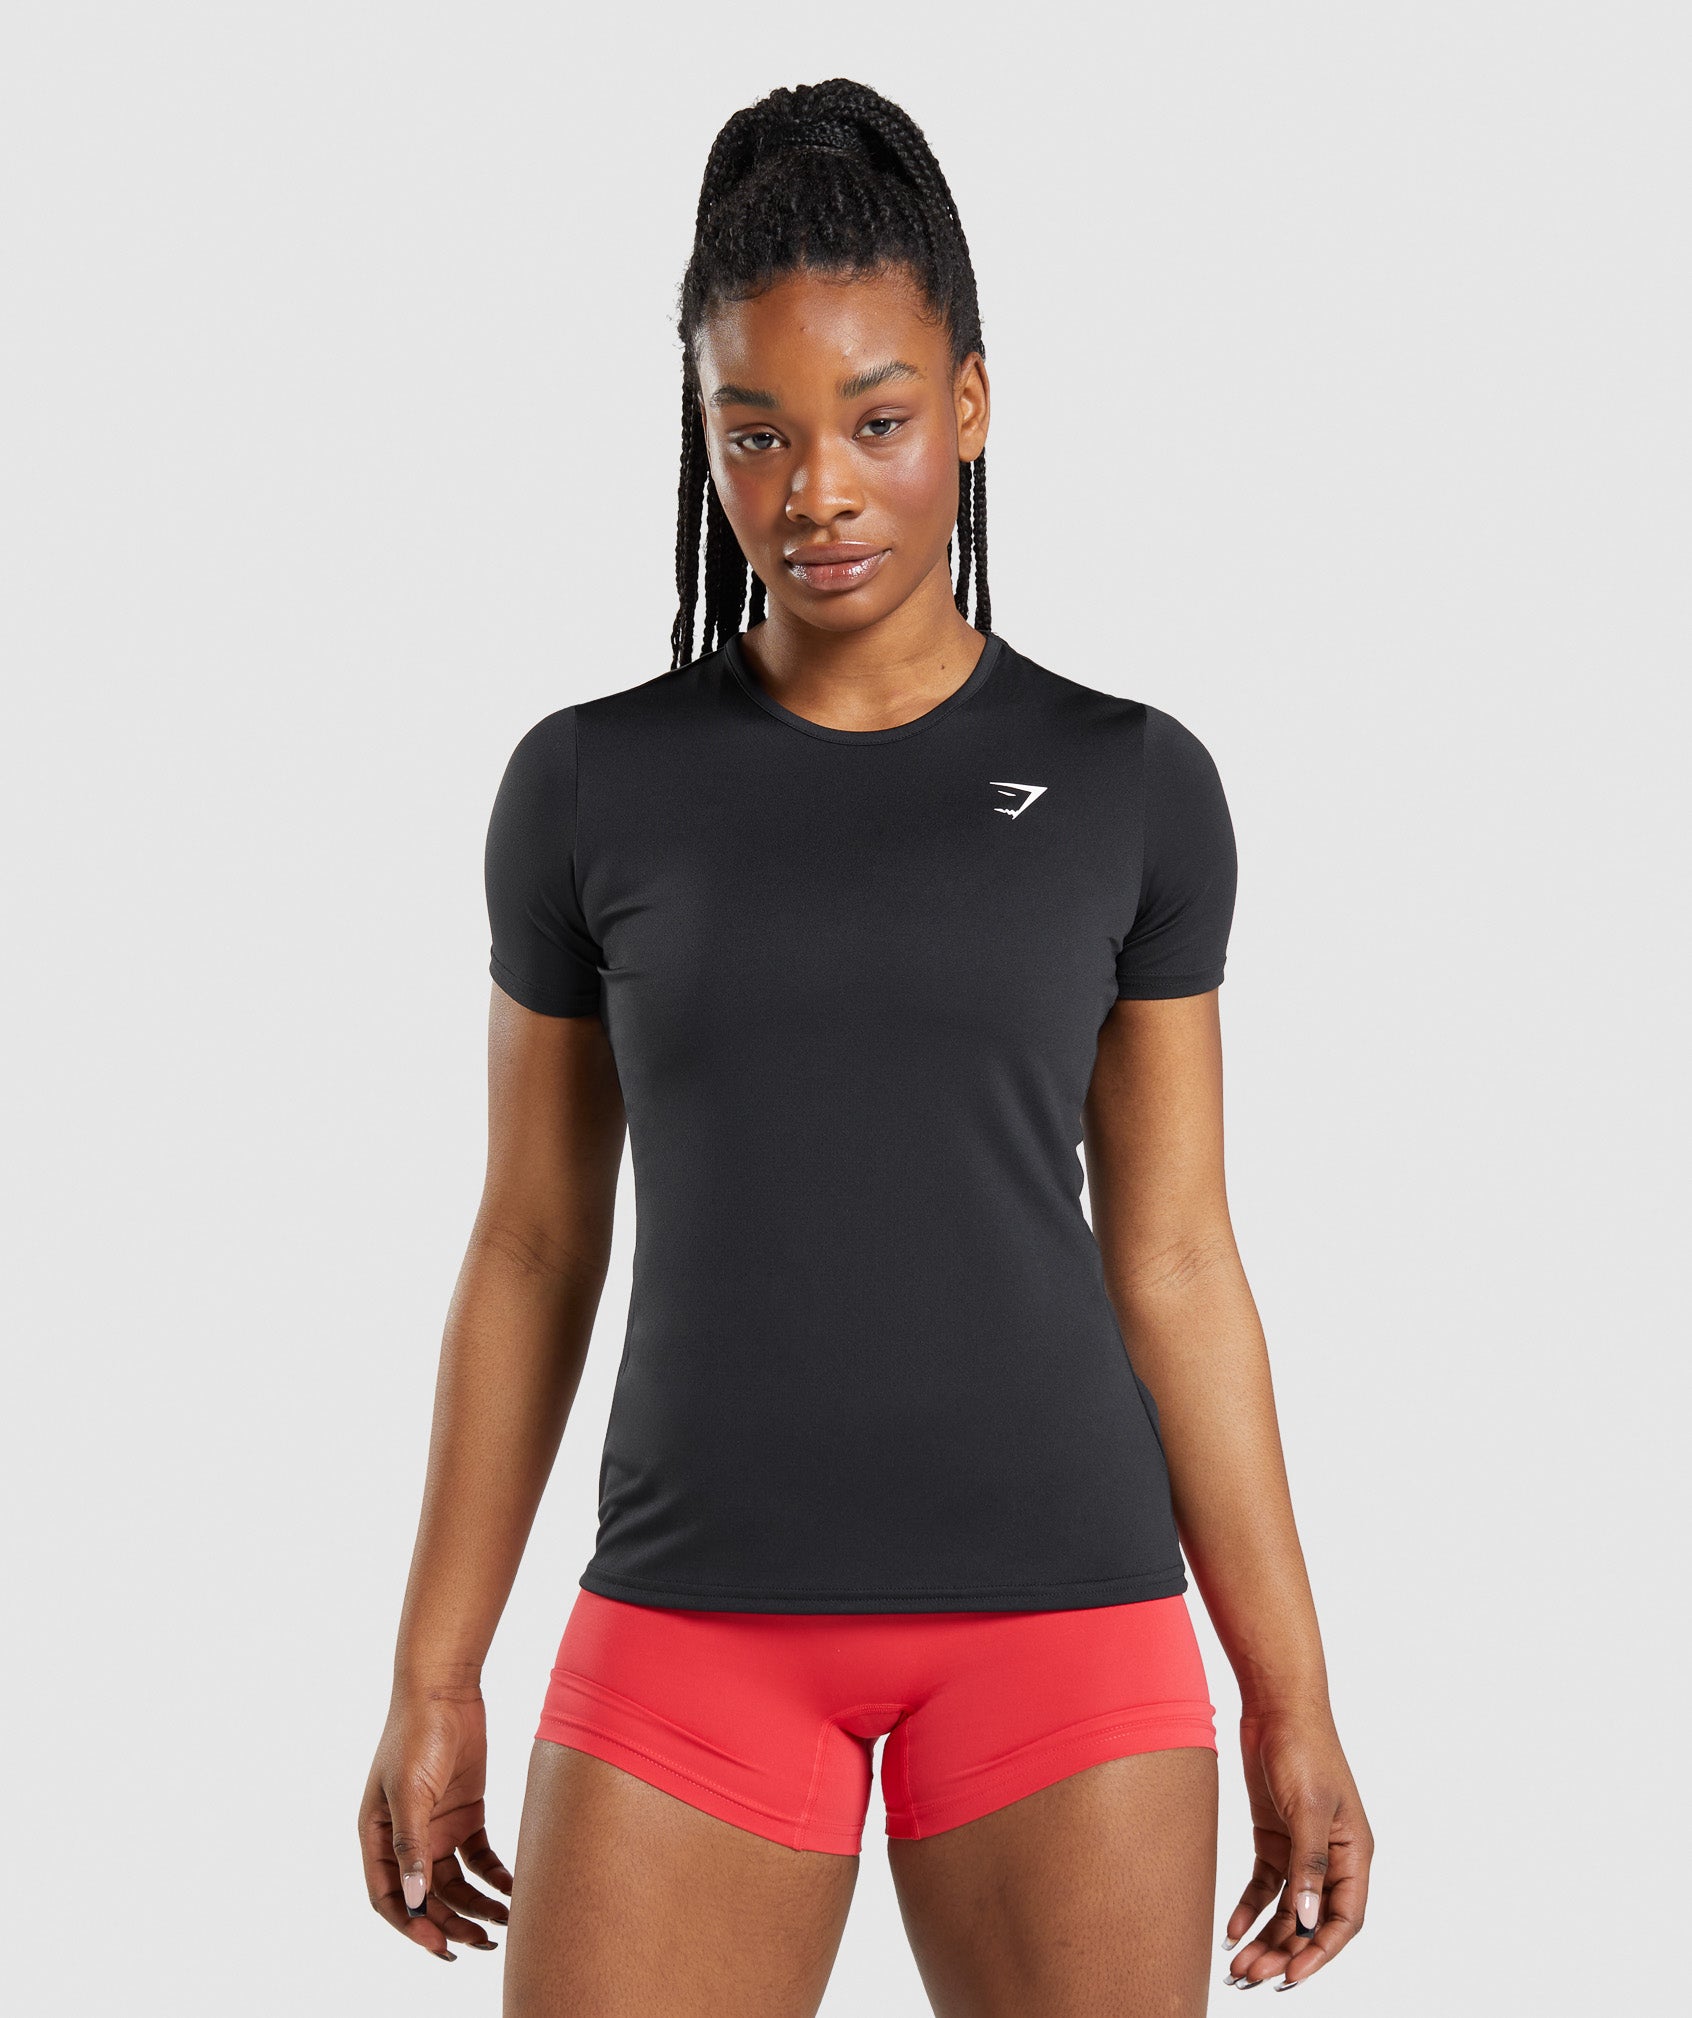 Women Workout Shirts Athletic Running Gym T-Shirts Short Sleeve Yoga Top 